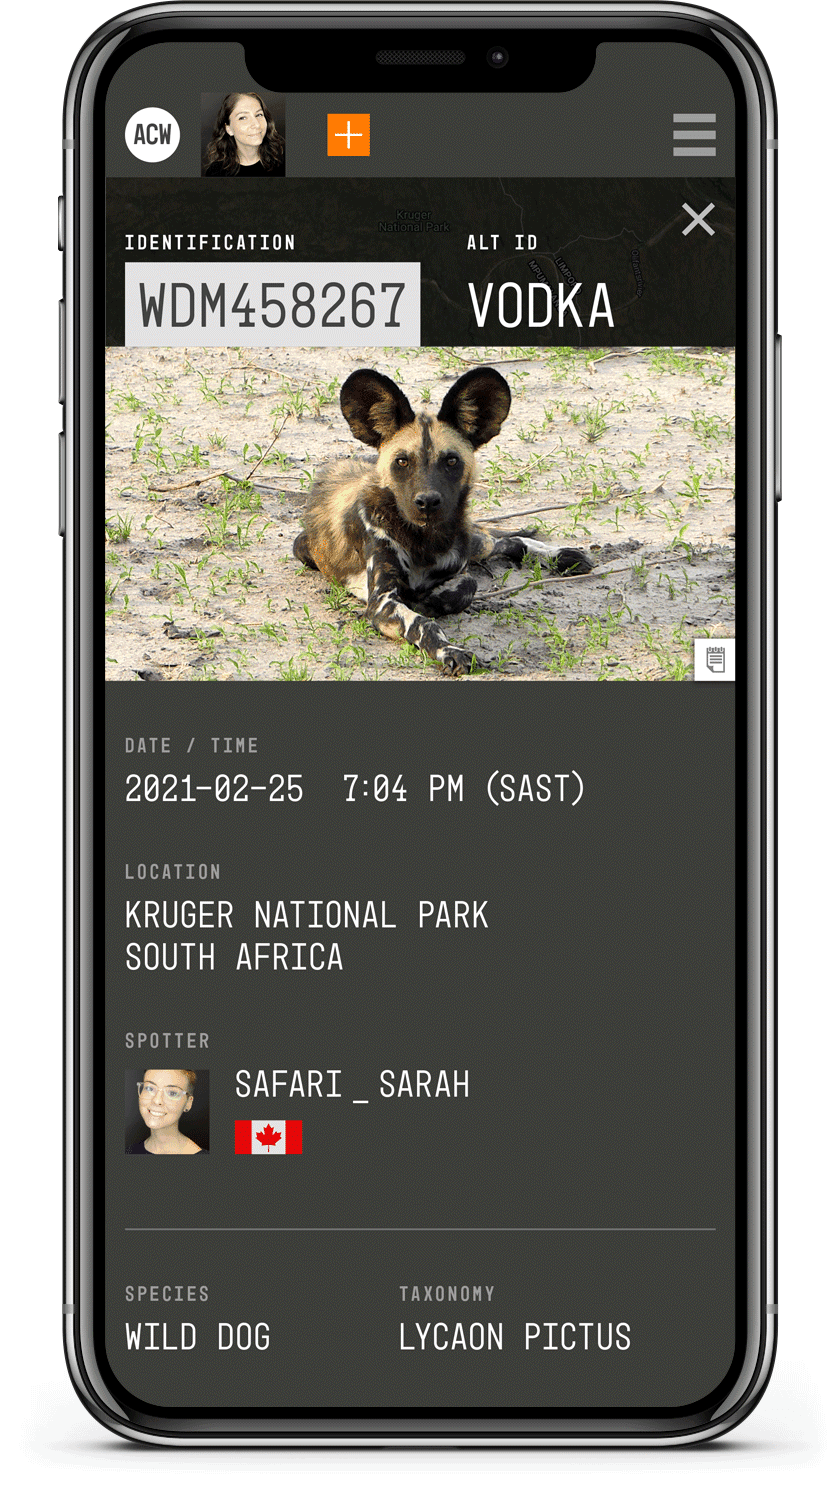 ACW product screenshot of wild dog profile on mobile phone